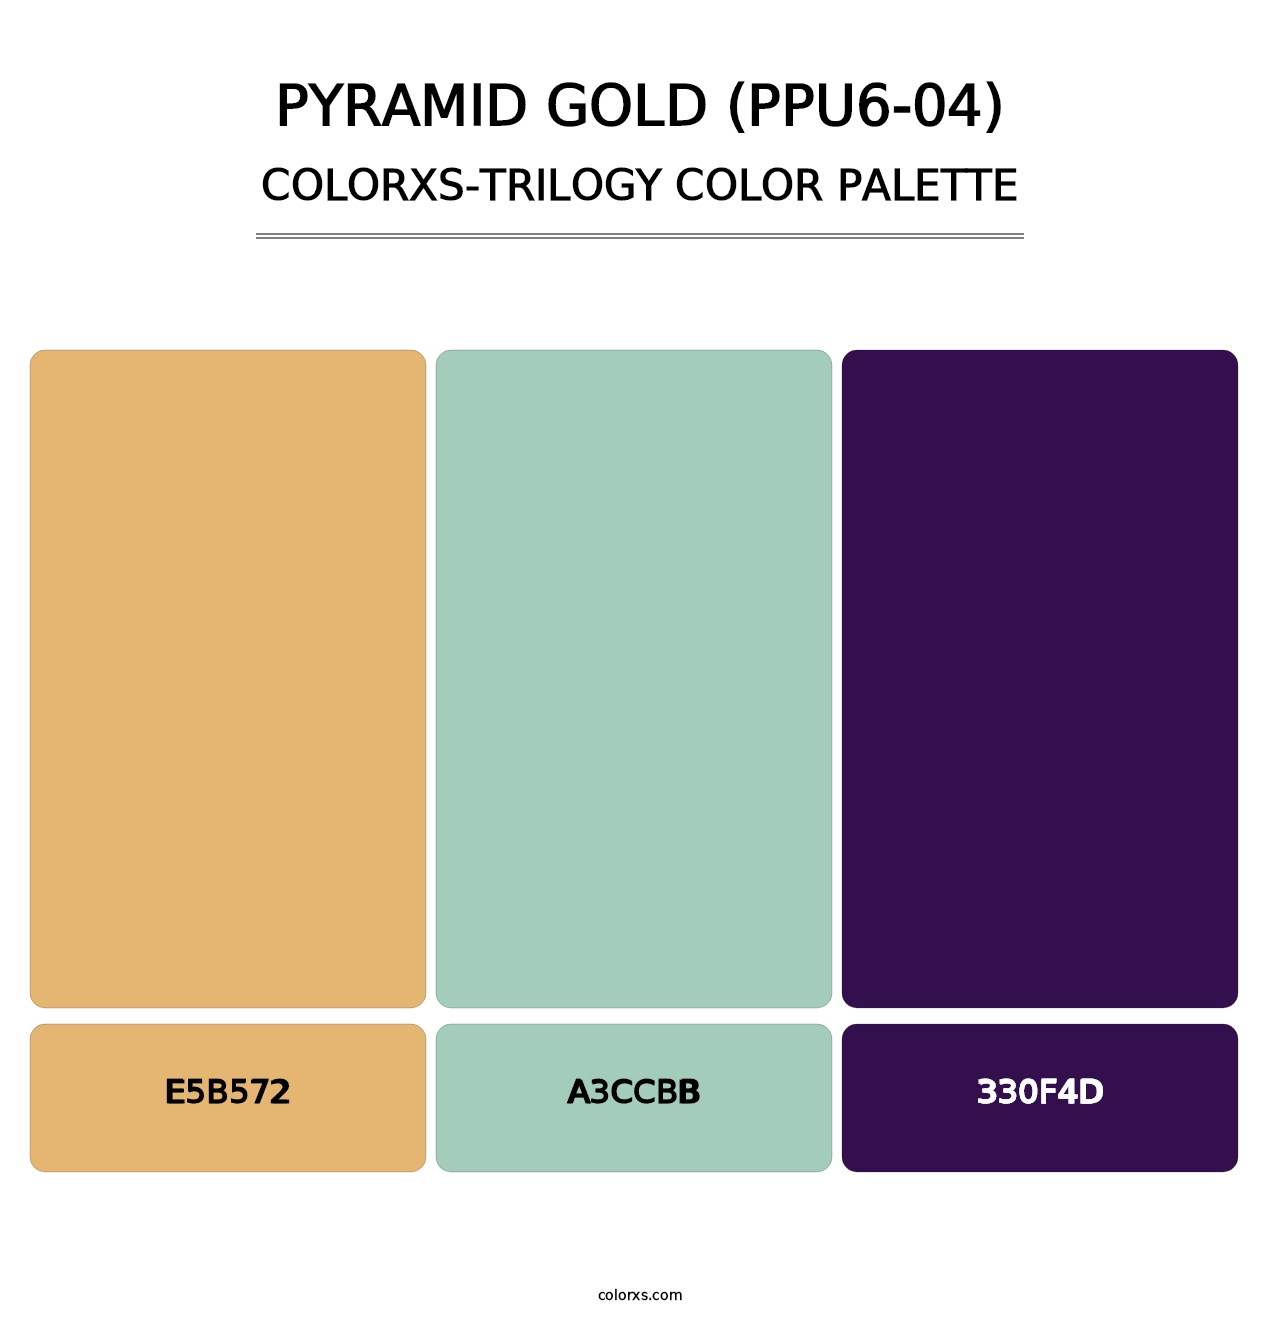 Pyramid Gold (PPU6-04) - Colorxs Trilogy Palette